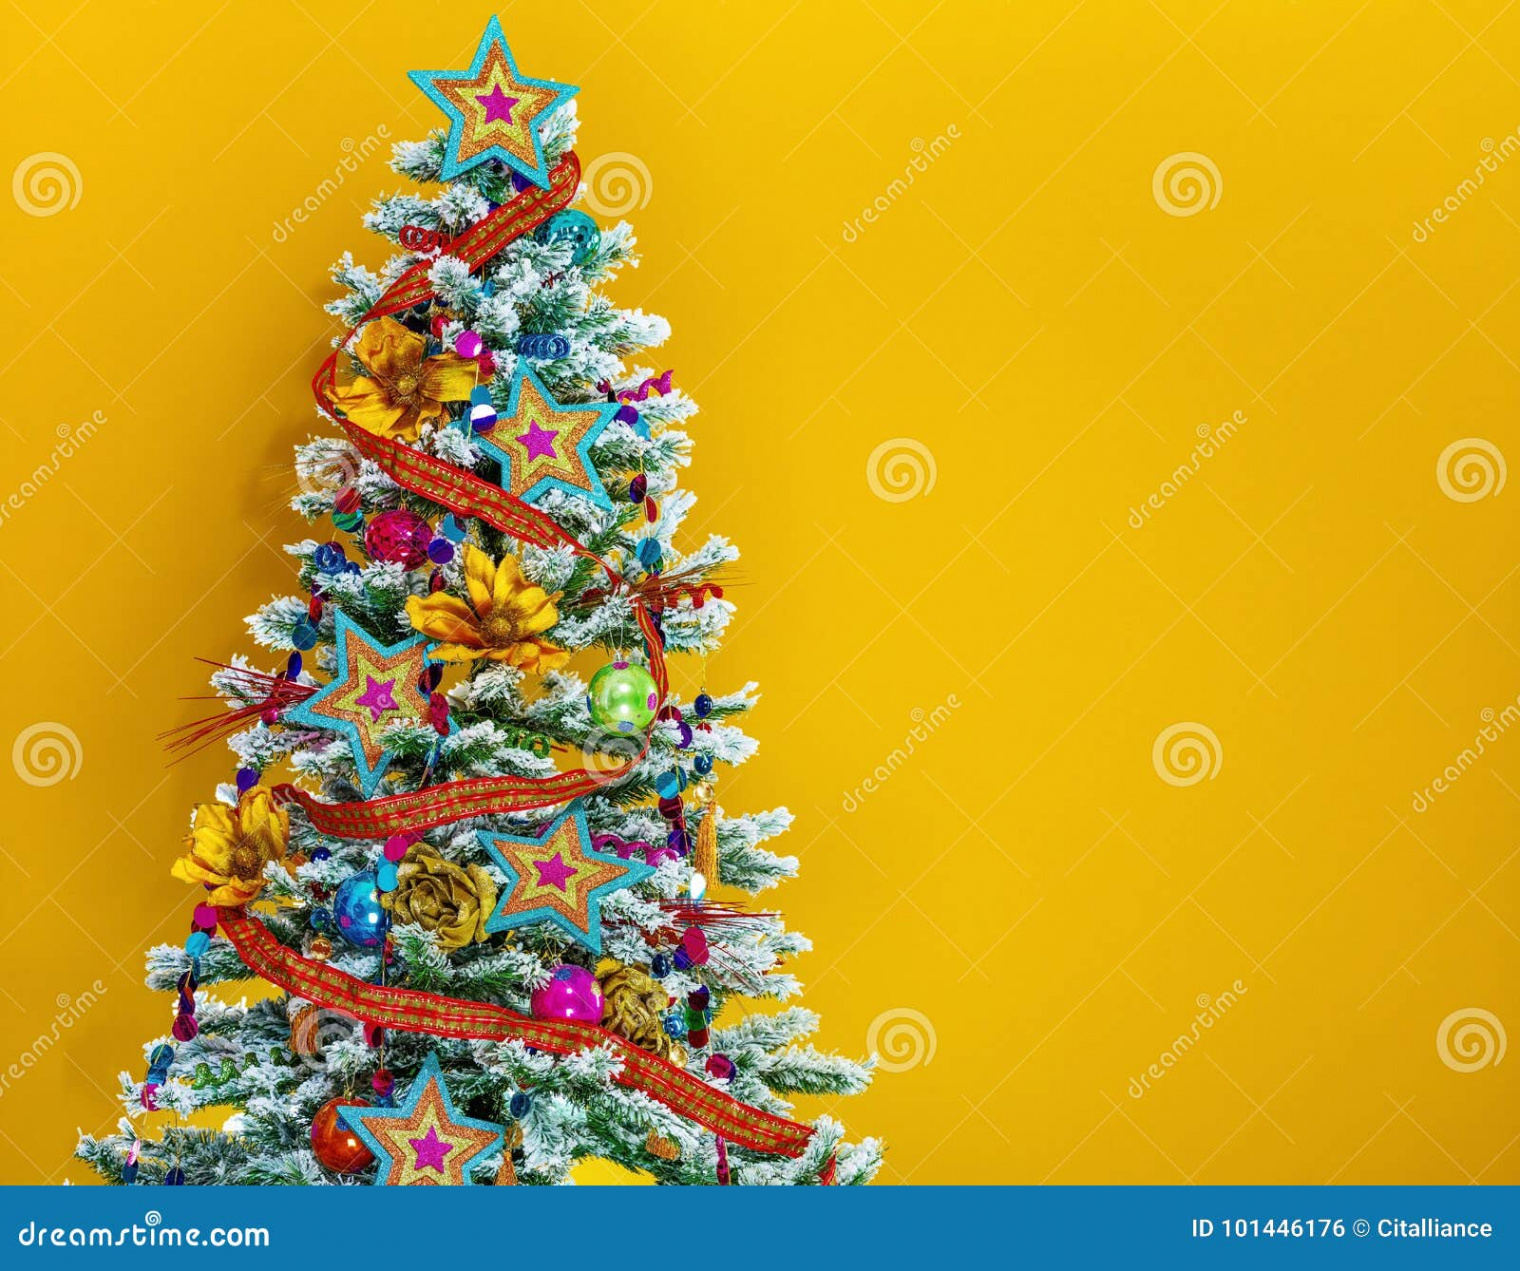 Colorful Christmas Tree on Yellow Background Stock Photo - Image